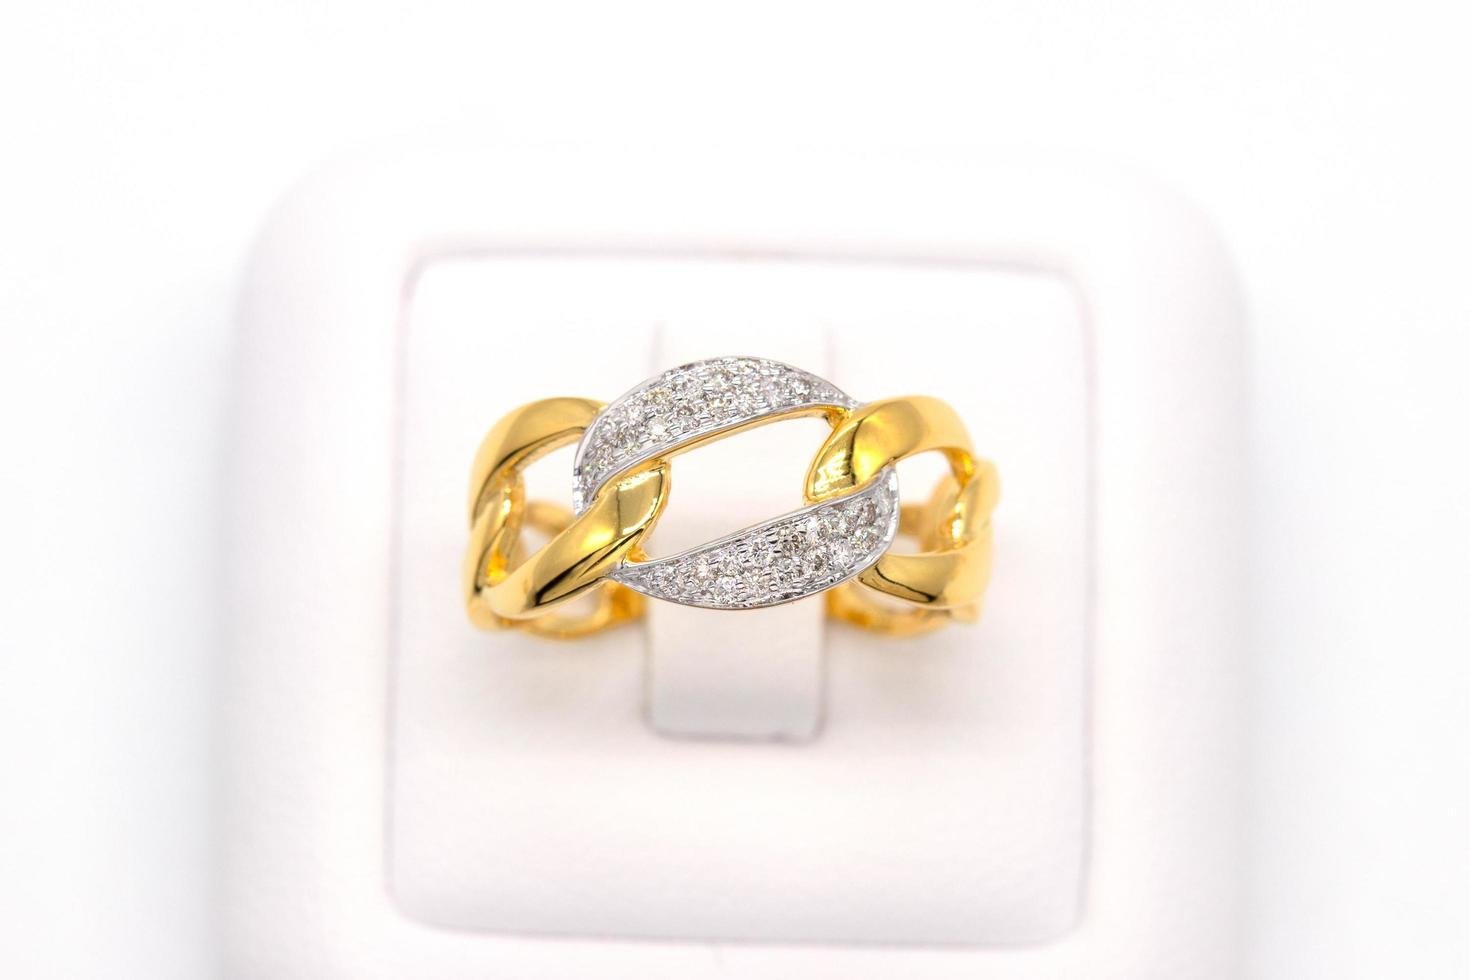 anel de diamante ouro 9k foto